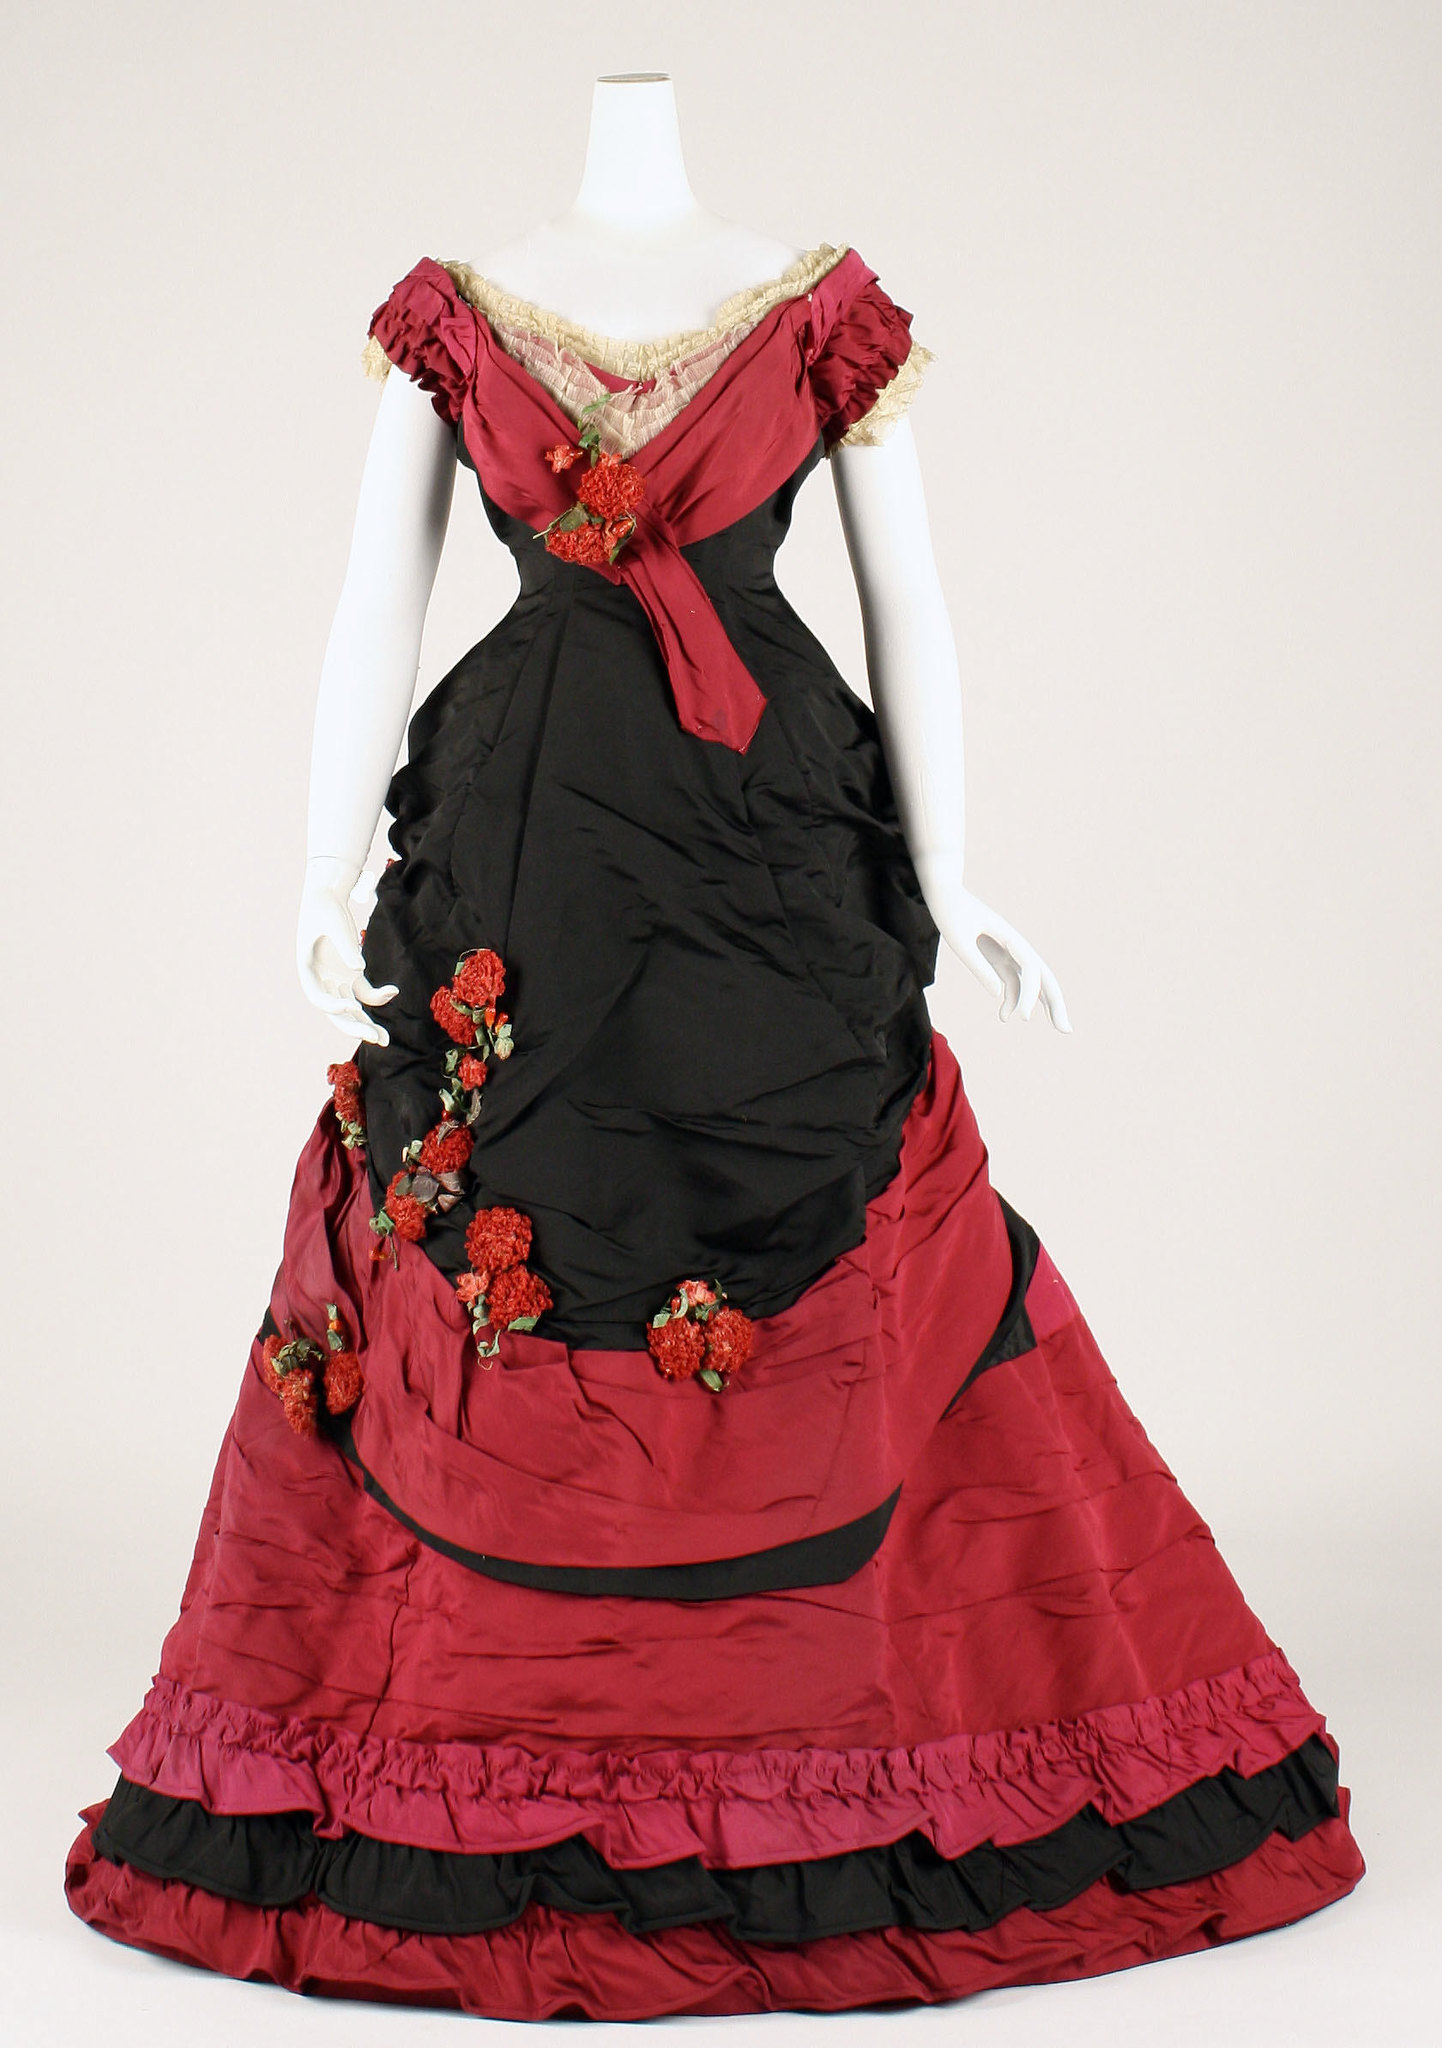 1878 Ball gown. British. Silk. metmuseum